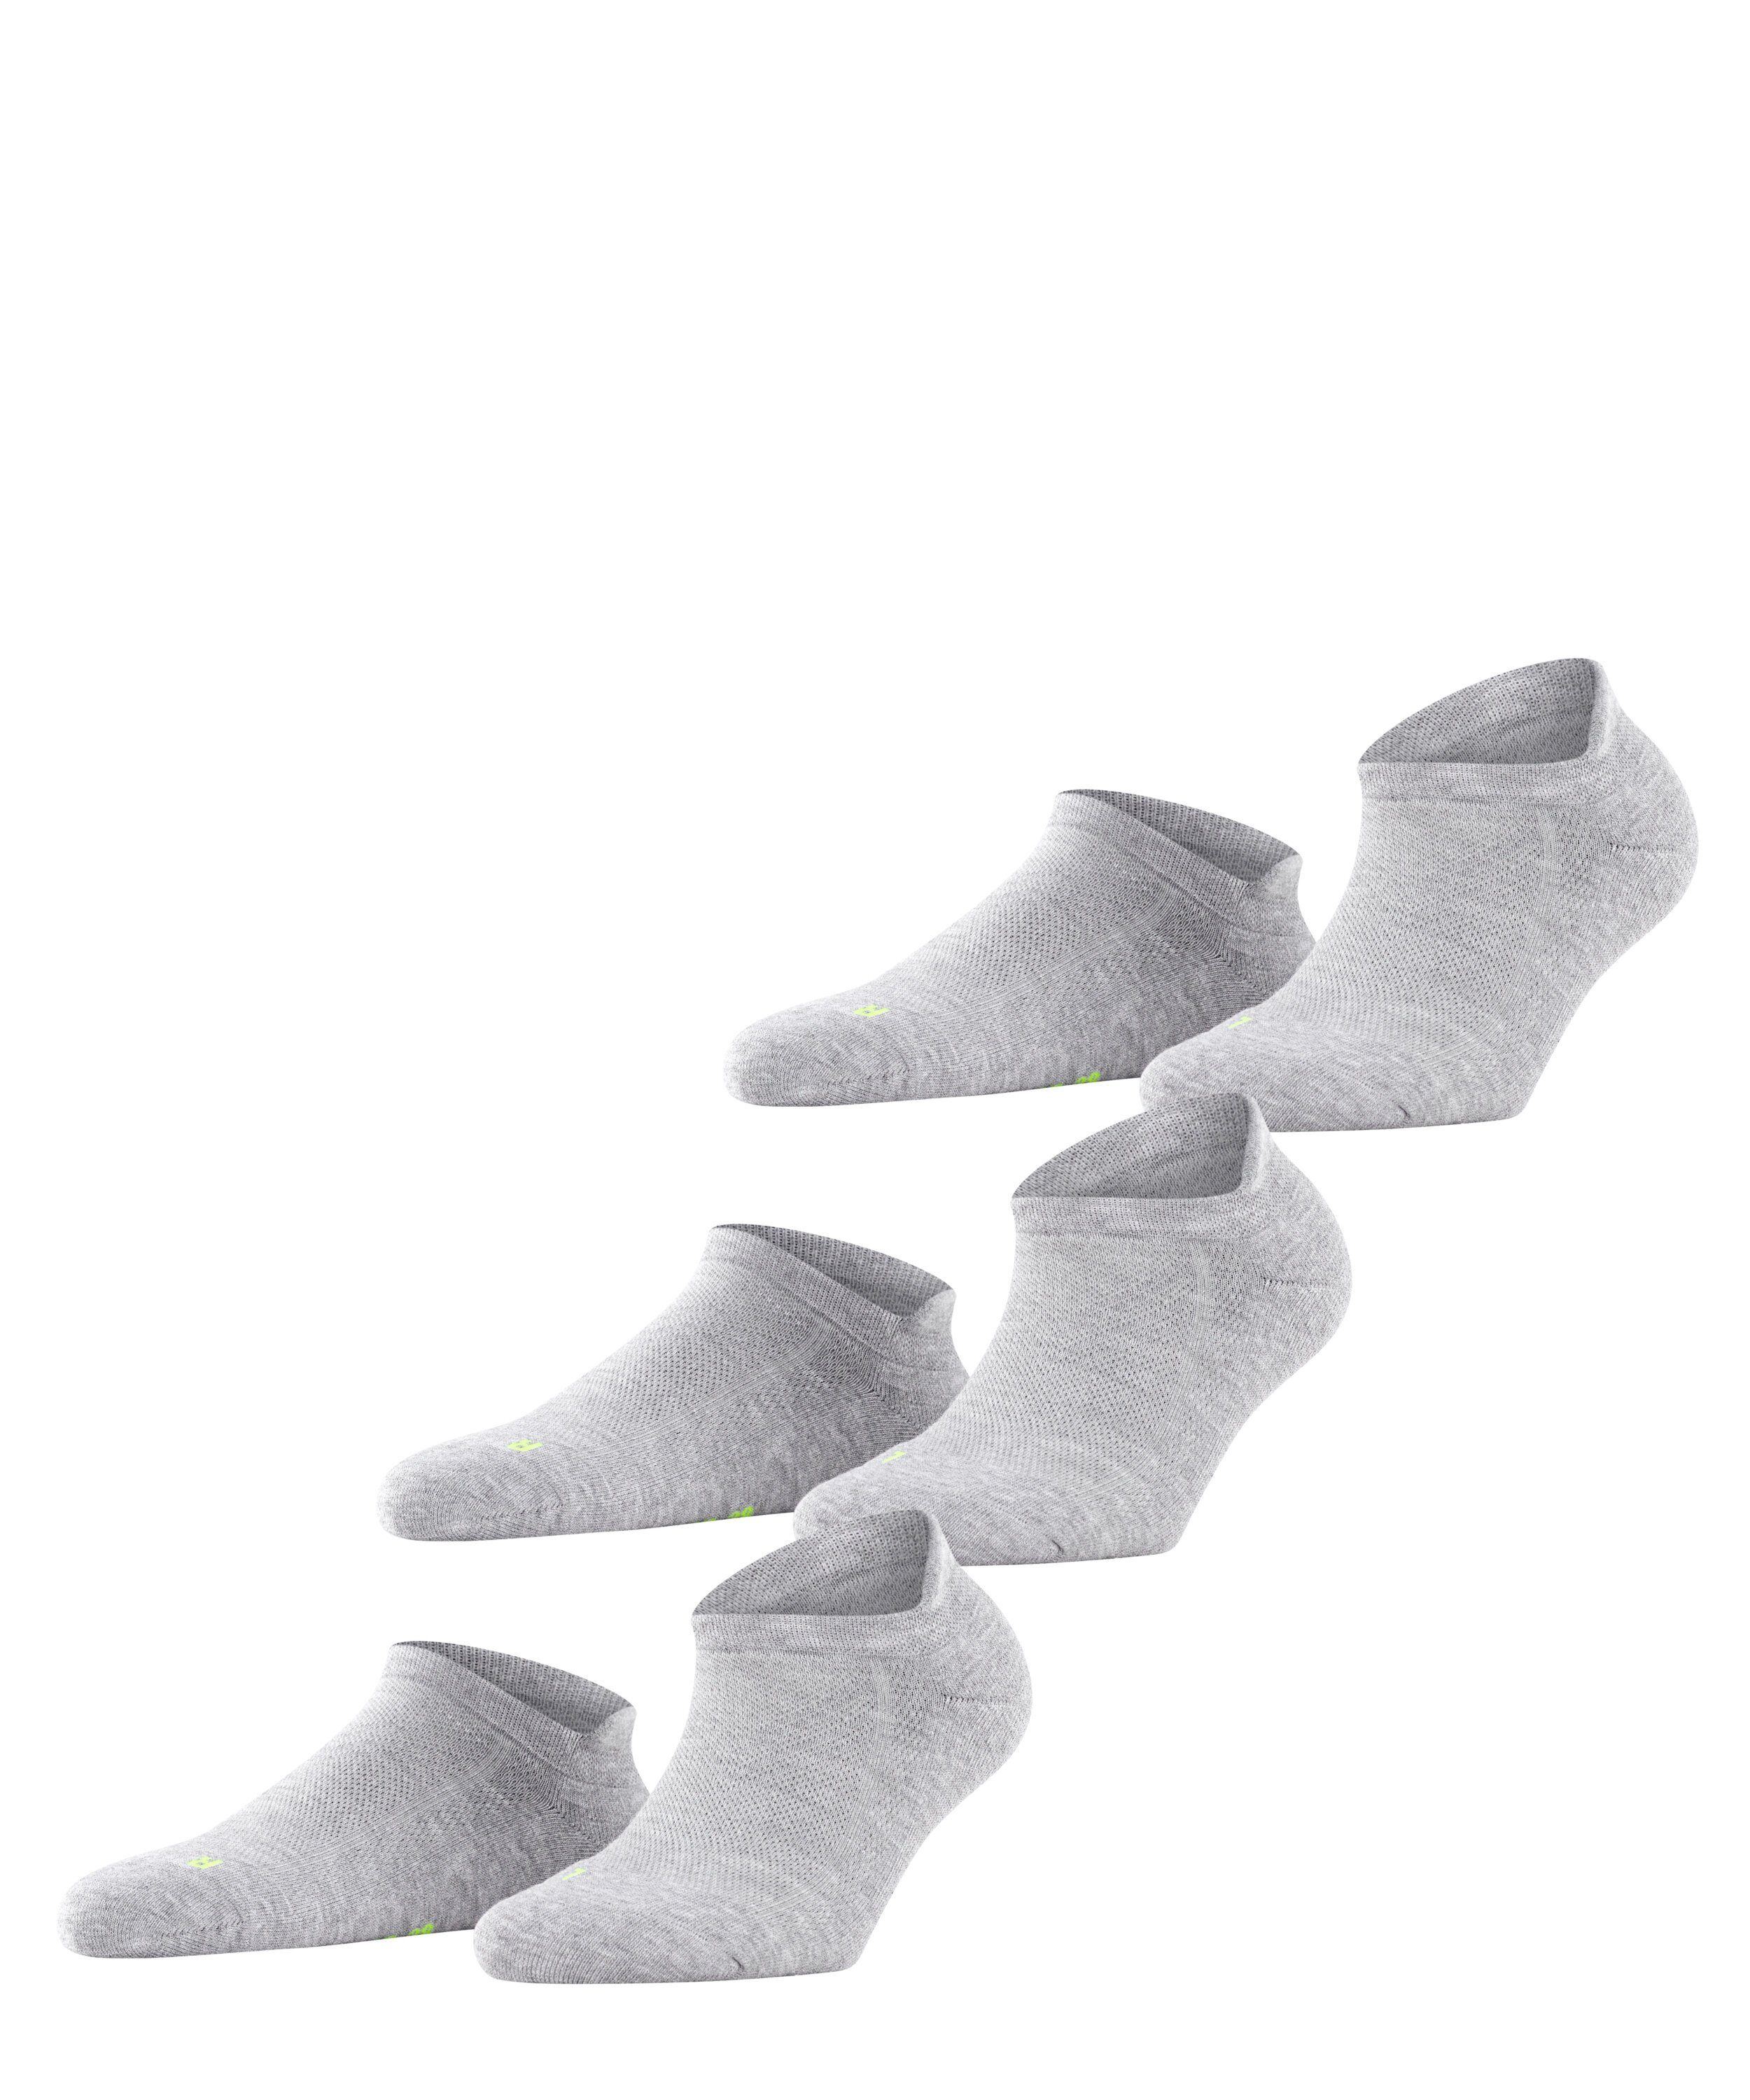 FALKE Sneakersocken Cool Kick 3-Pack mit ultraleichter Plüschsohle